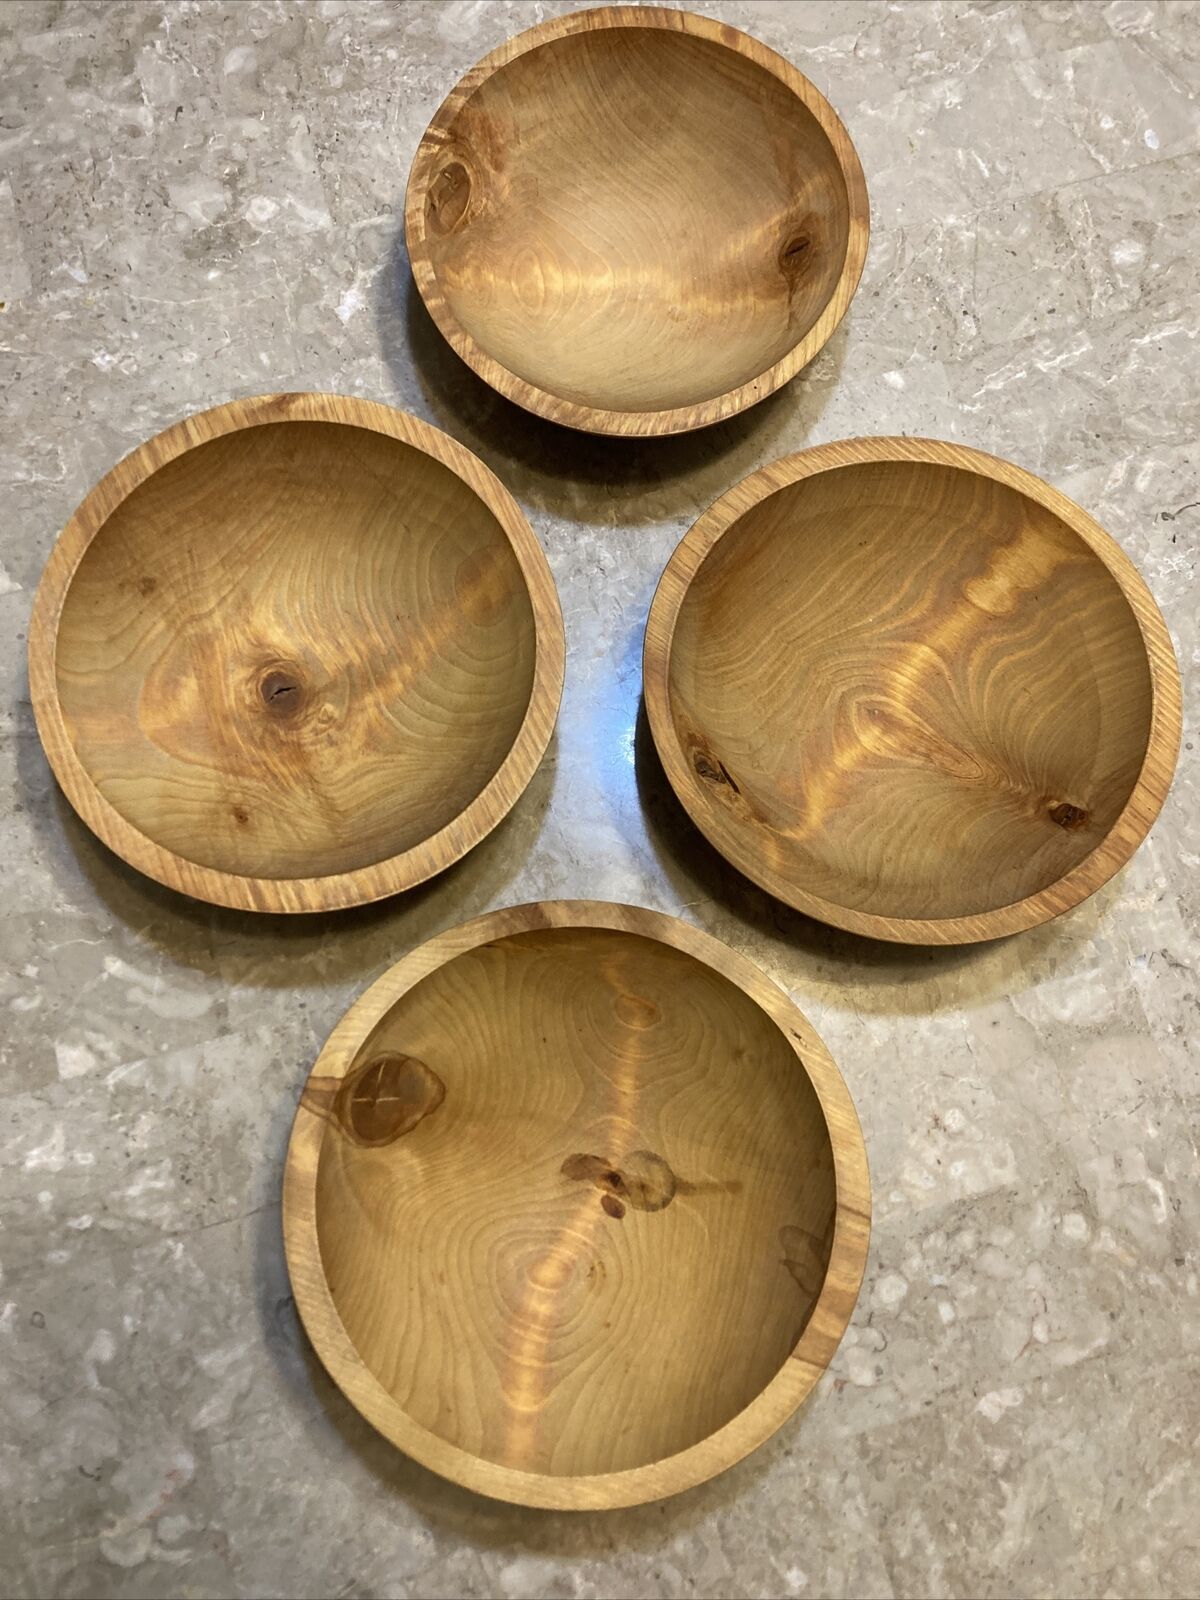 4 The Great Alaskan Bowl Company Bowl Turned Wooden Bowl Set Split Knots